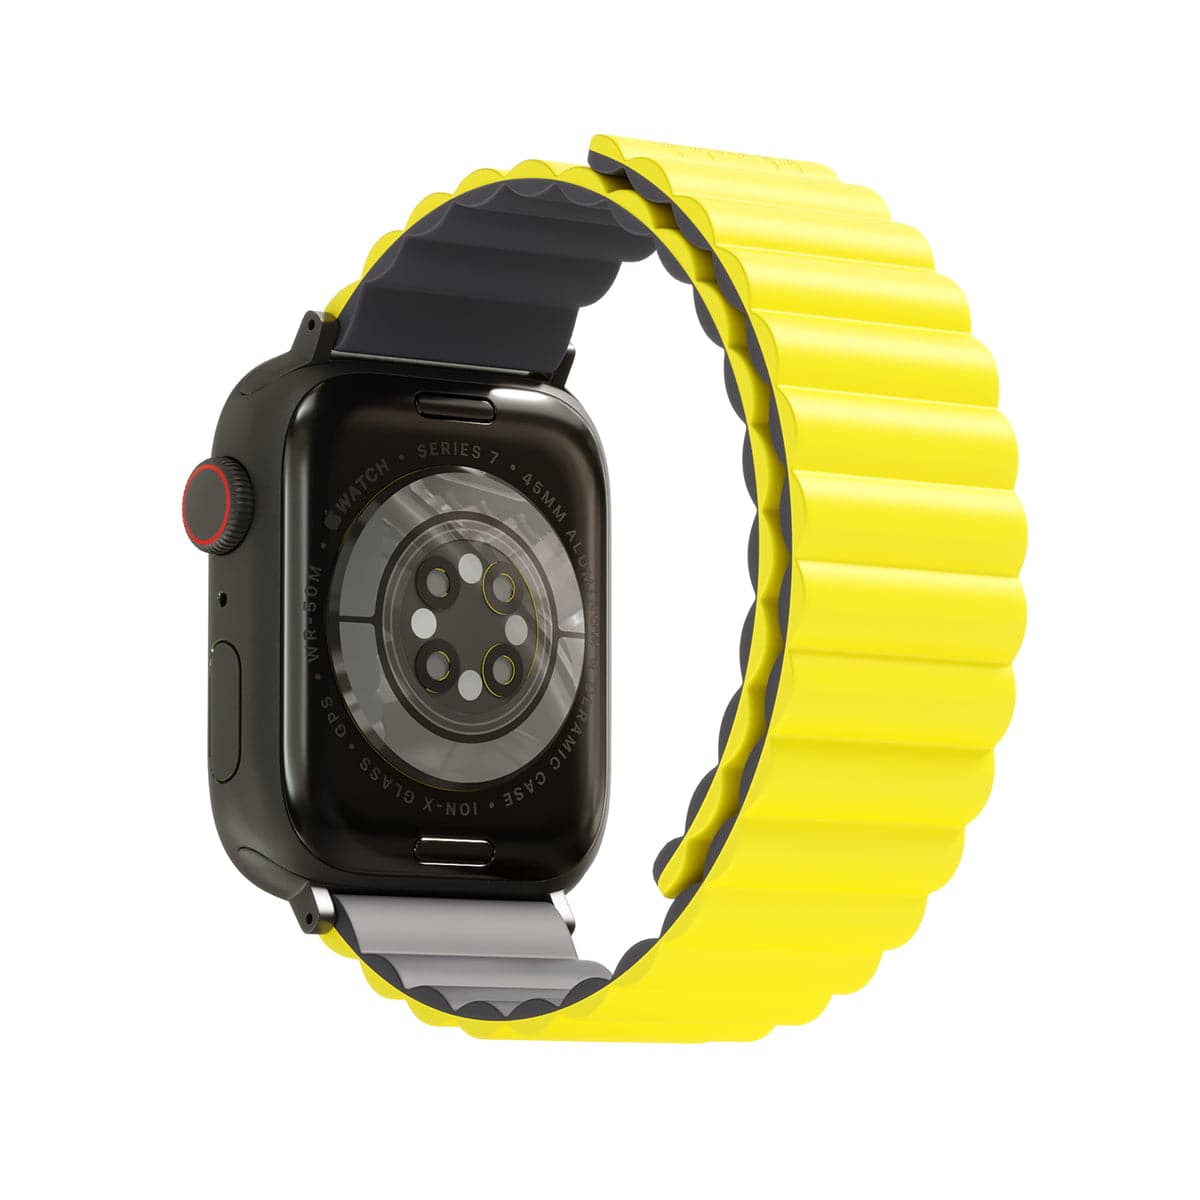 Flip Silikon Wendearmband für Apple Watch - Bluestein